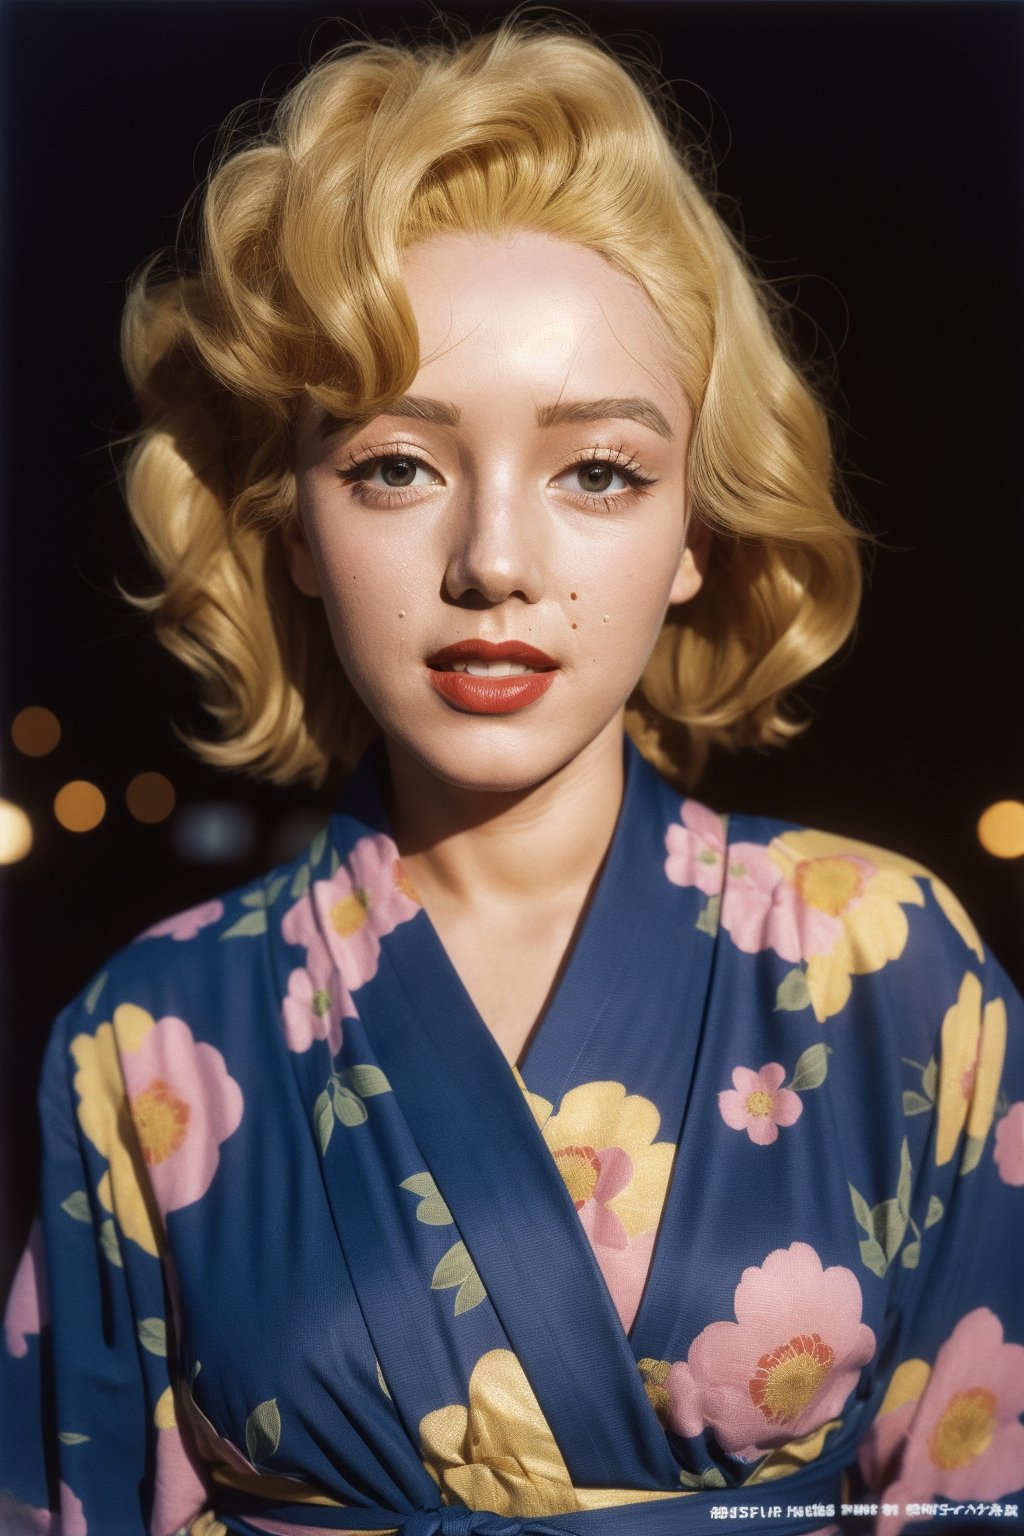 a  girl, Marilyn Monroe's face, beach,summer night,perfect body,Martin Parr style, Kodak portra 400 color film texture, soft studio light, ultra-detailed,close-up,golden yukata